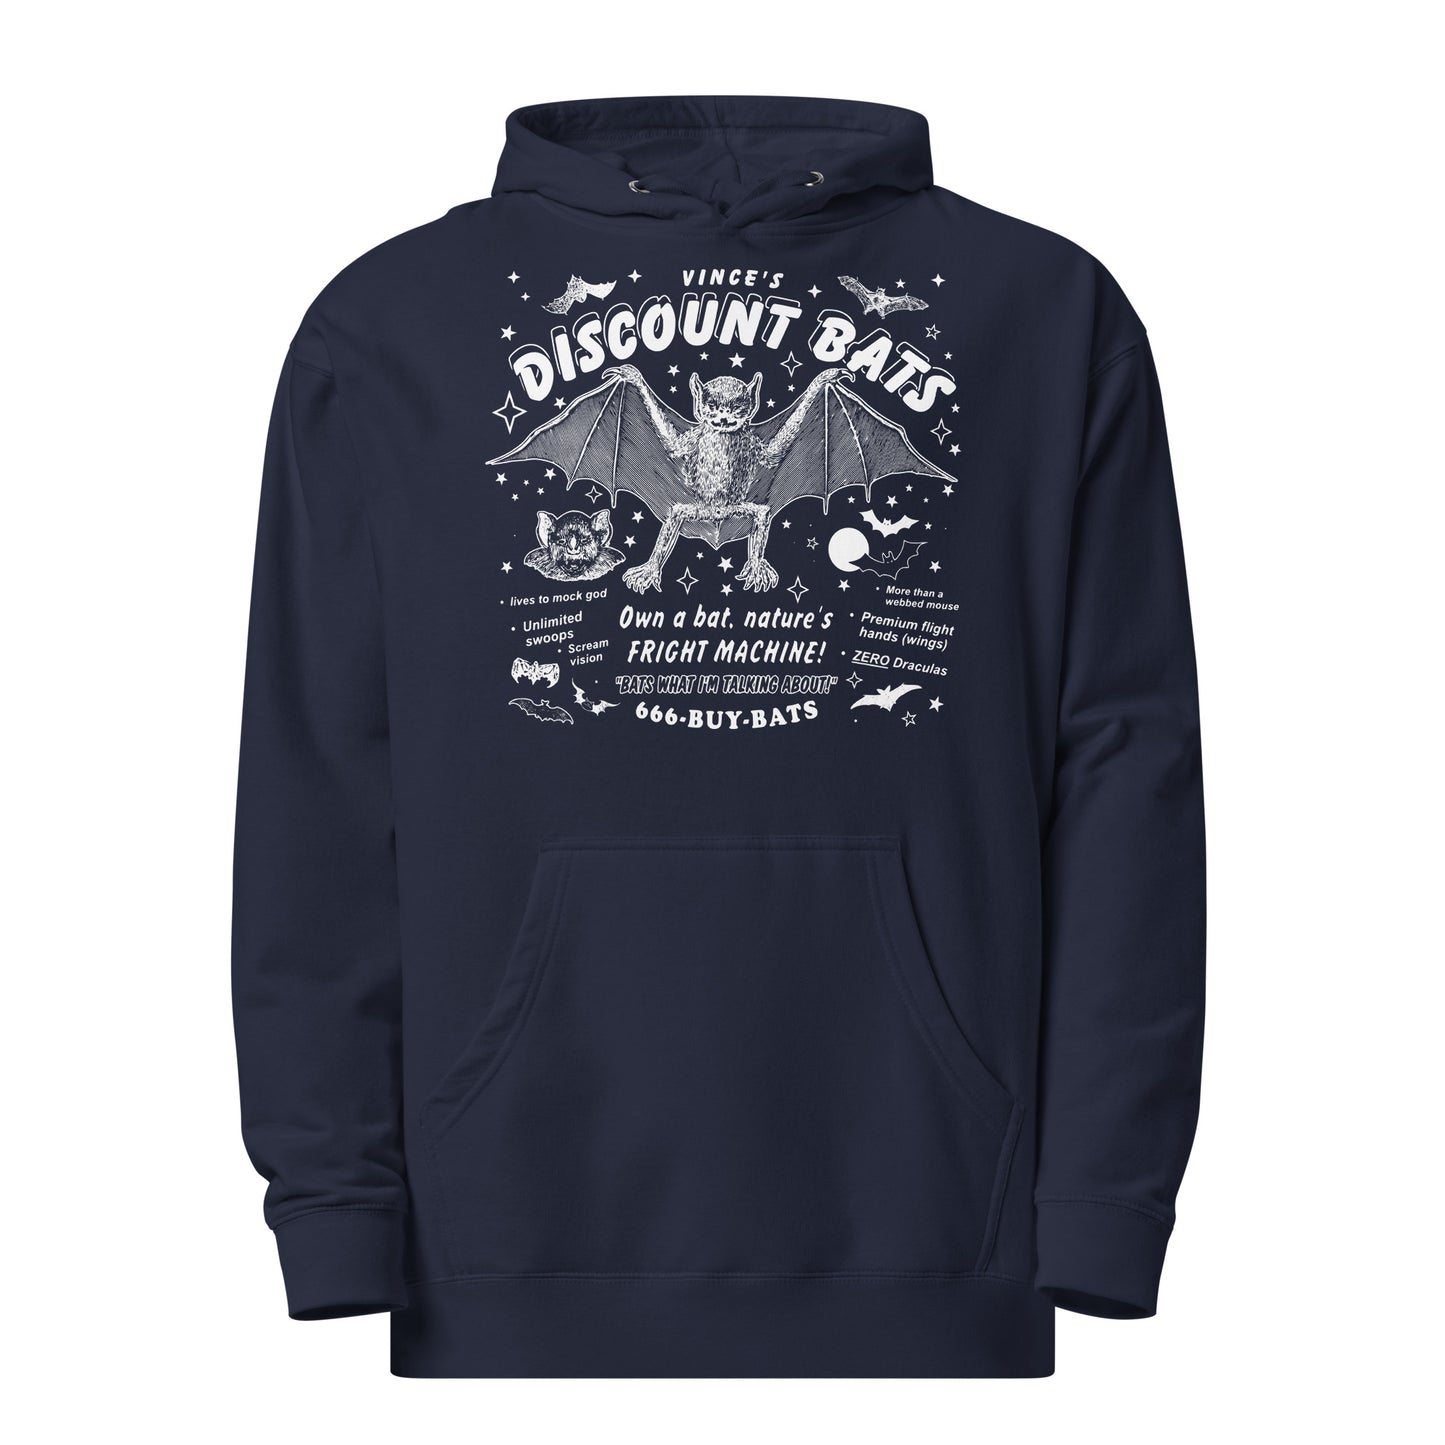 "Discount Bats" Unisex midweight hoodie